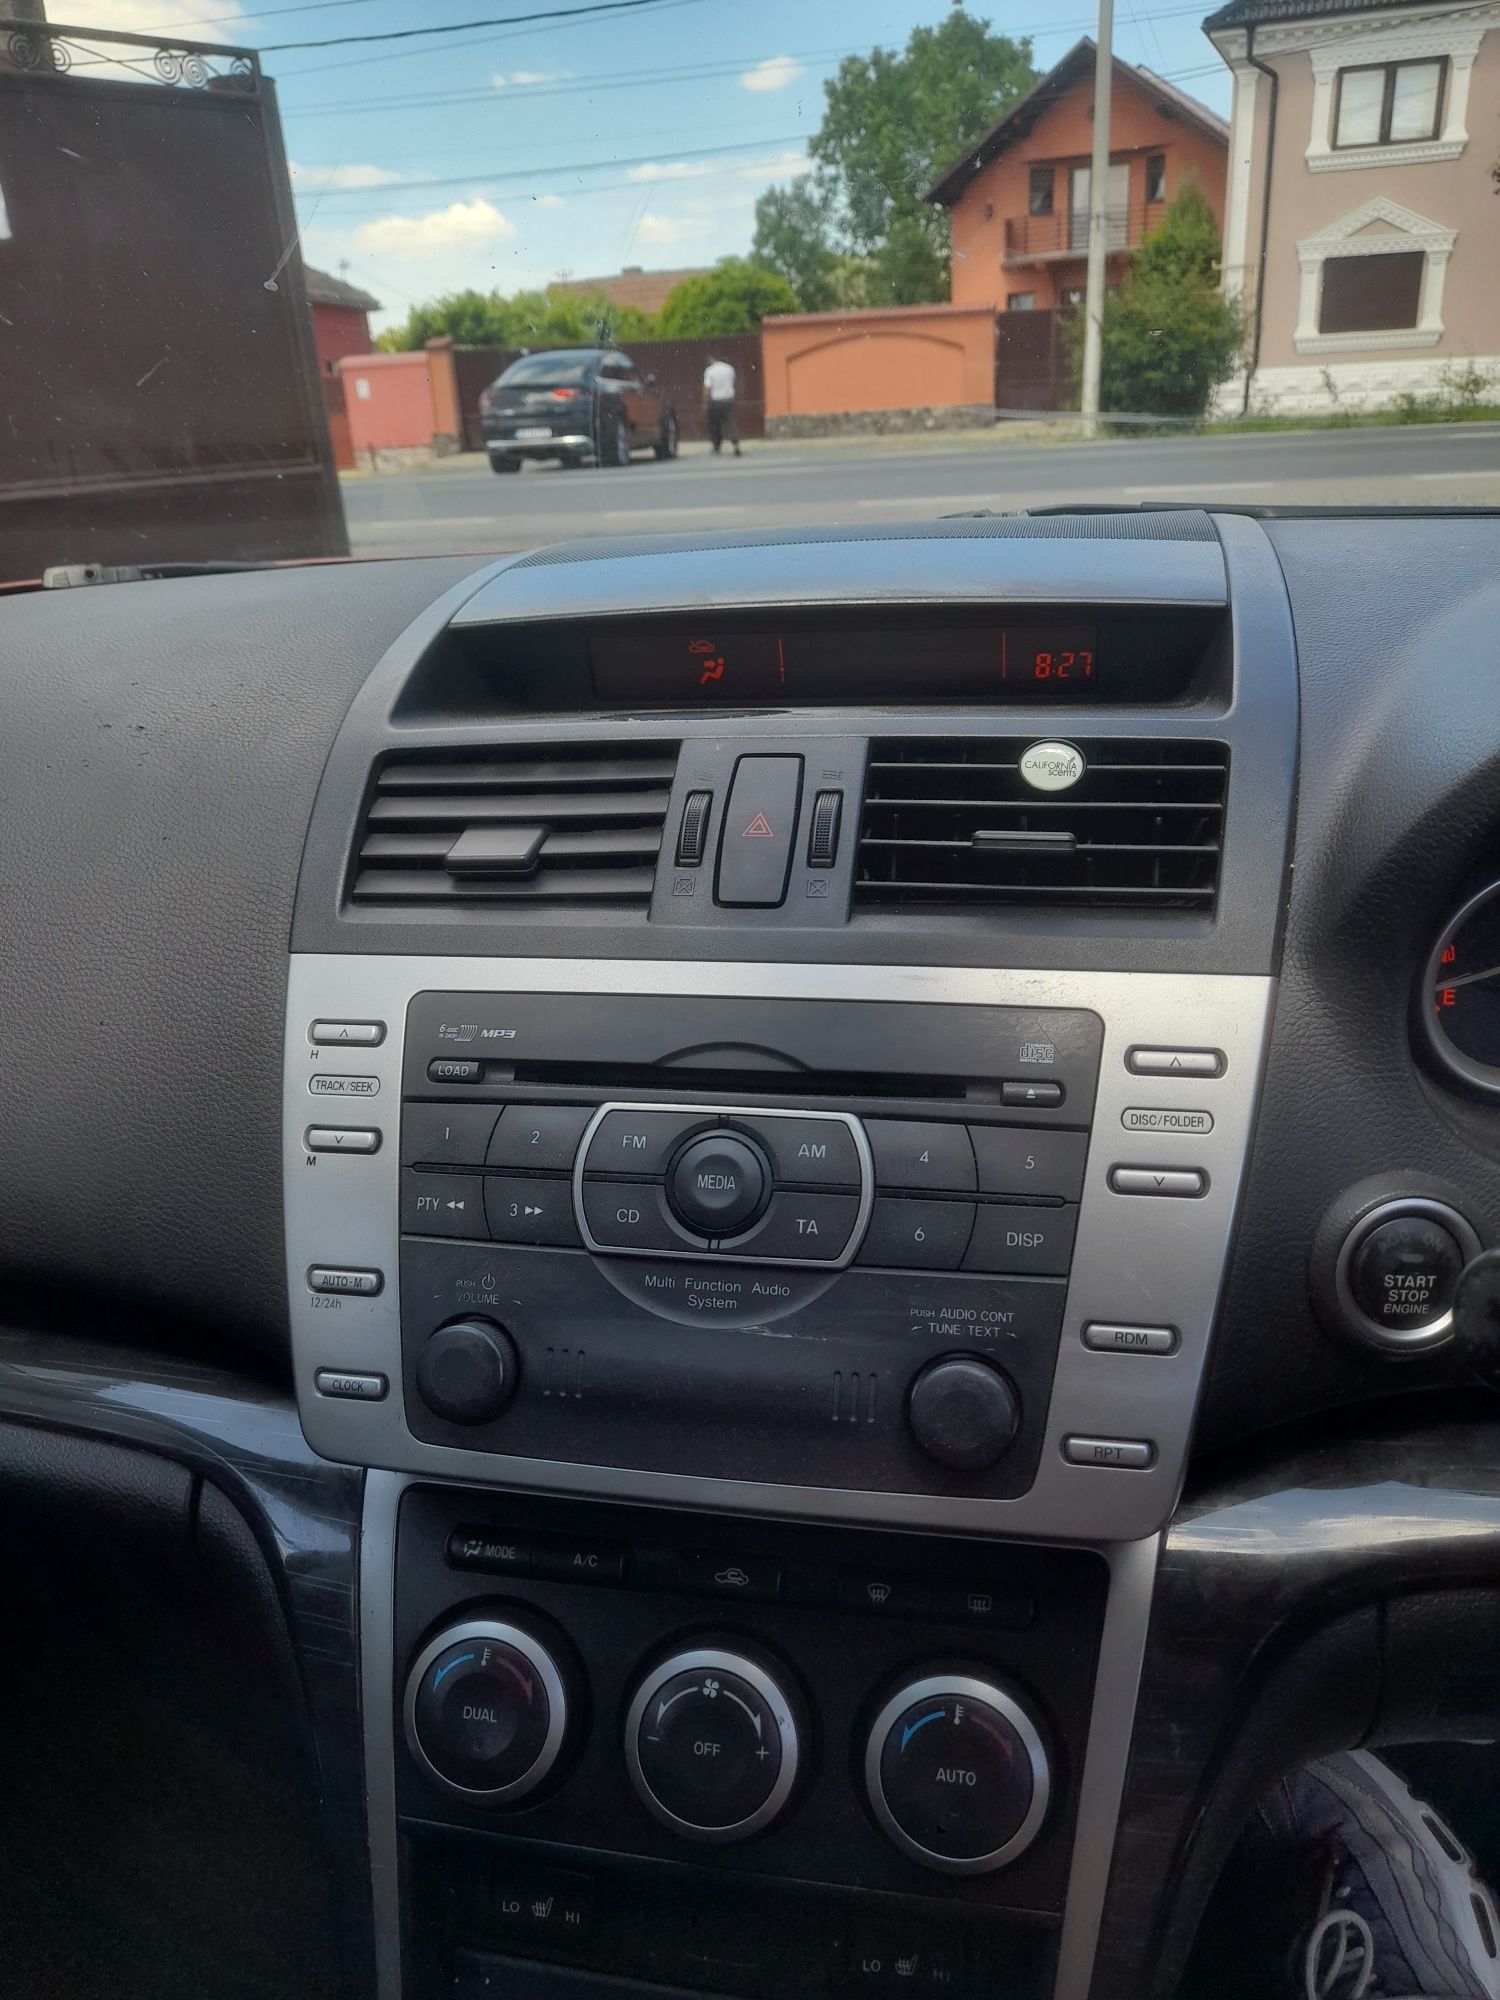 Navigatie/Radio MP3 Mazda 6 GH an 2007-2013